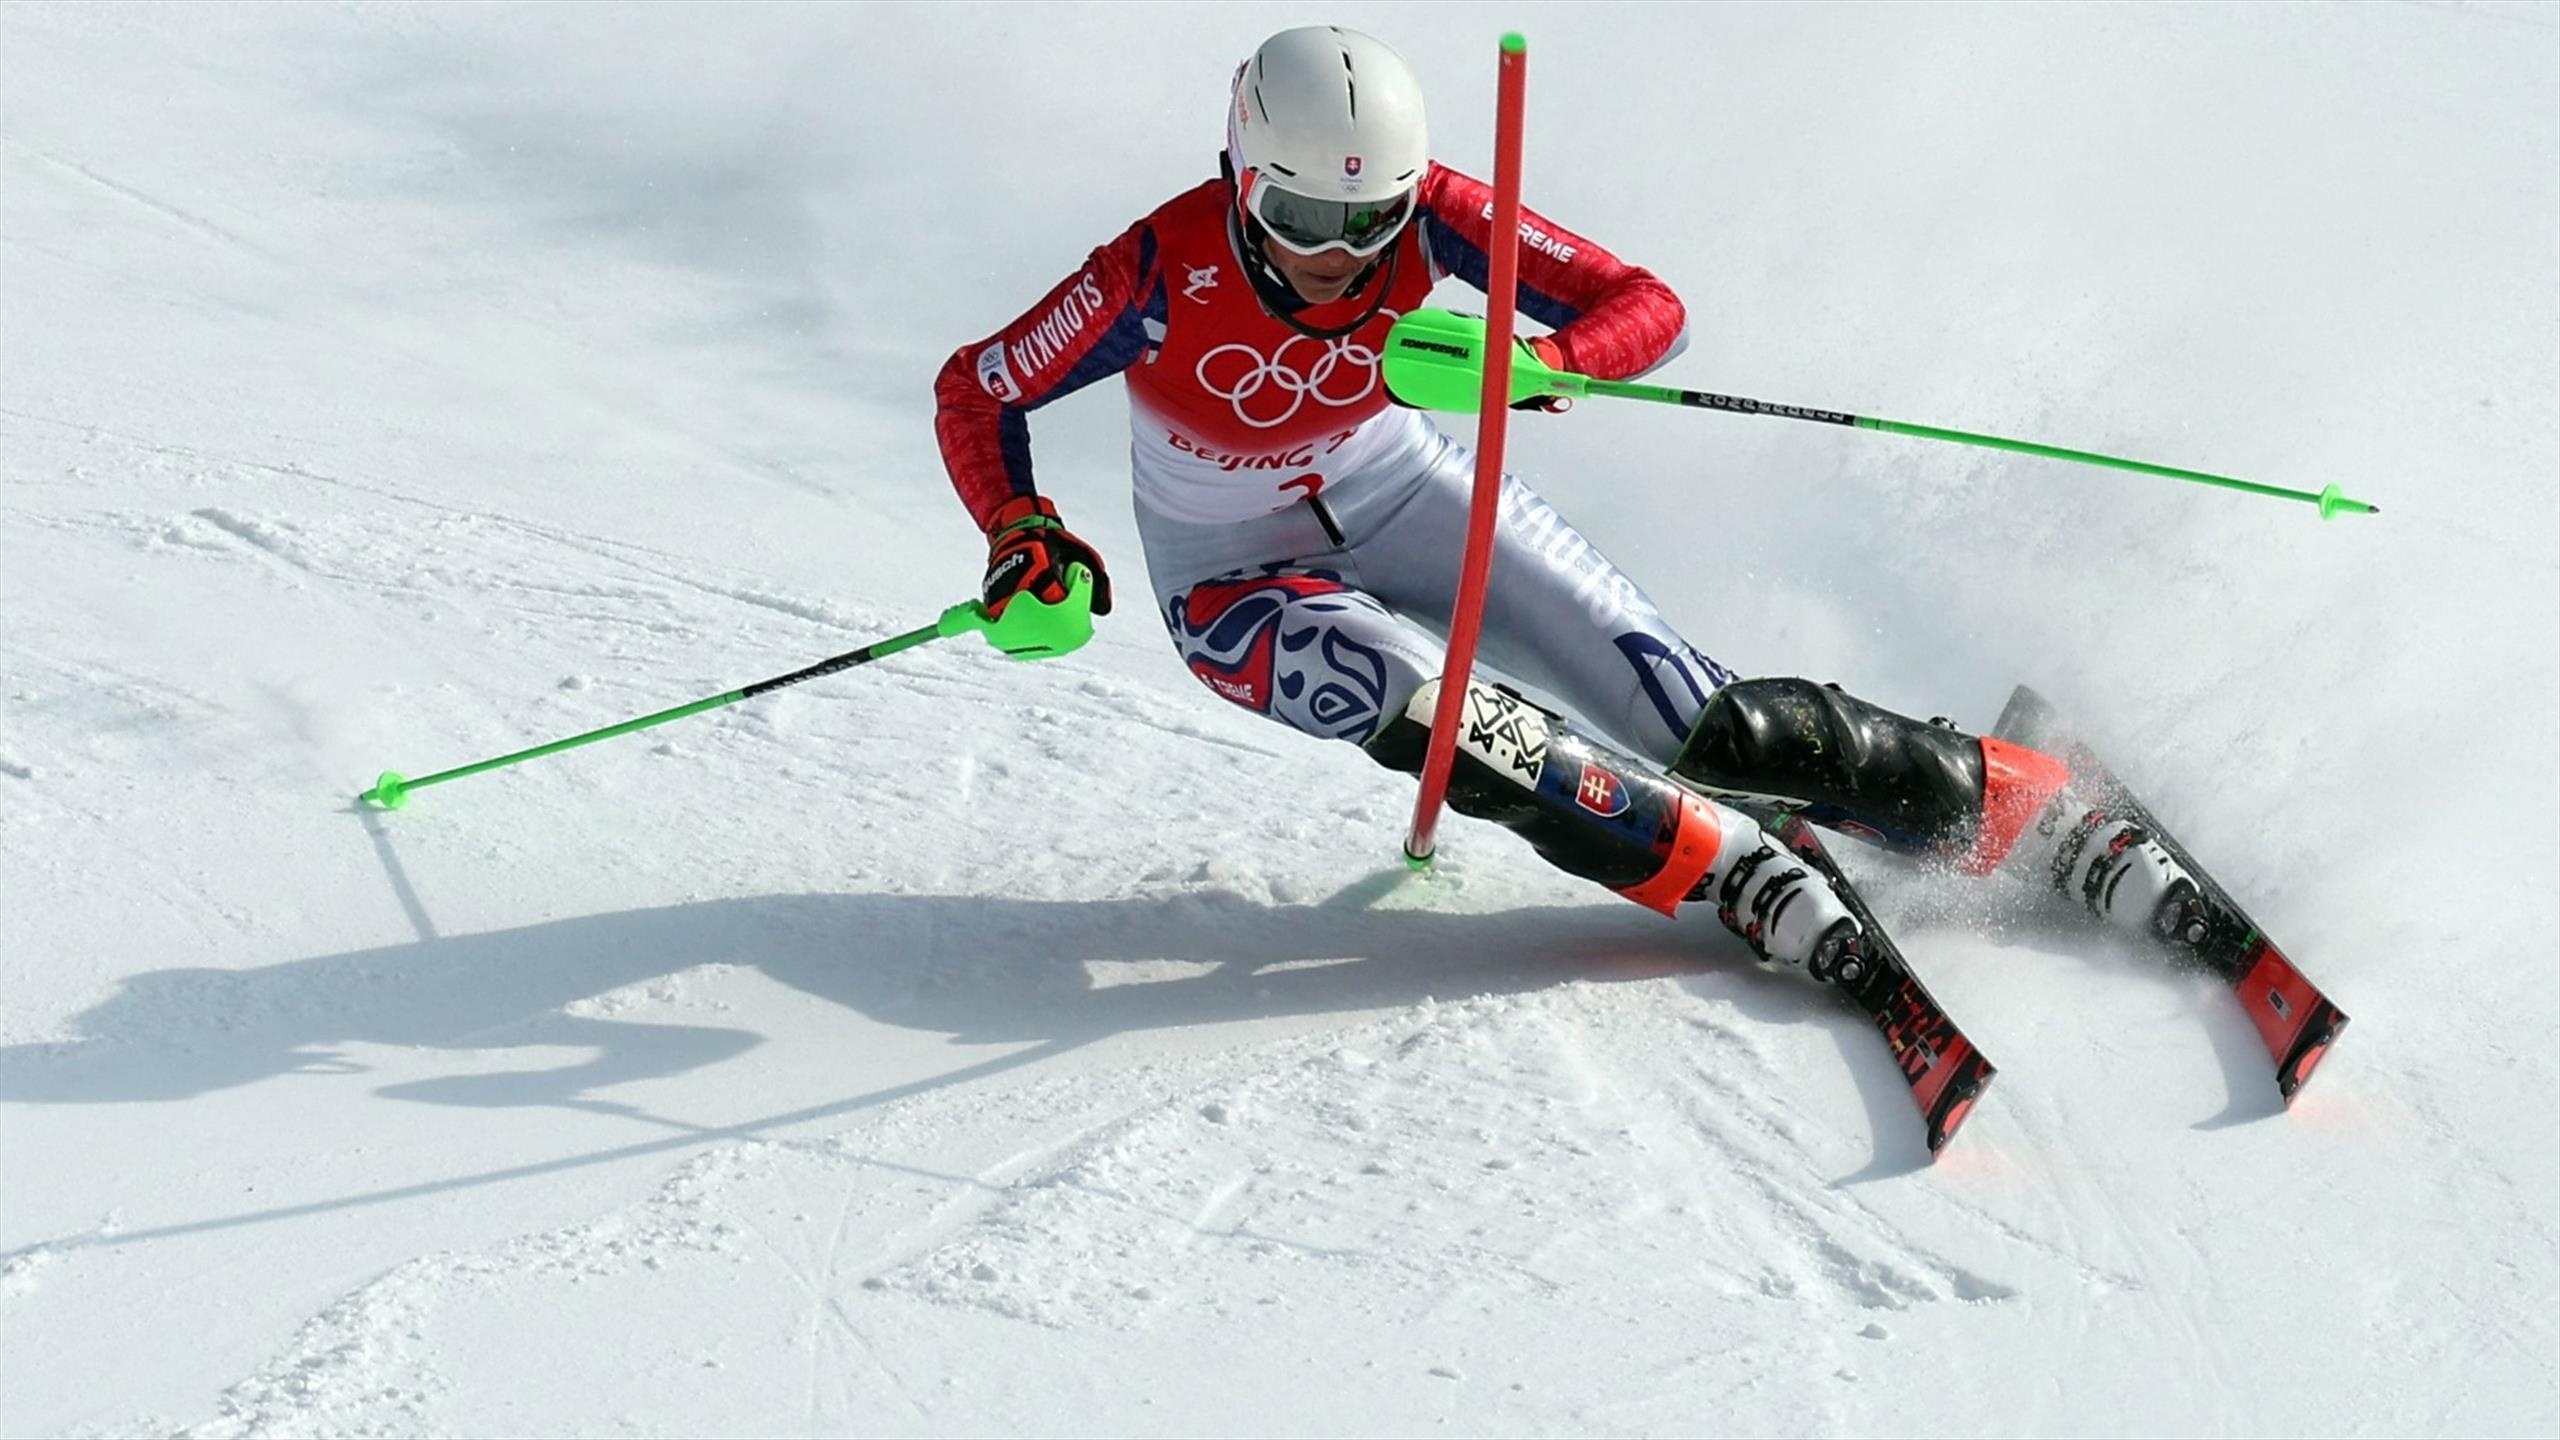 Slalom: Petra Vlhova, Beijing 2022 Winter Olympics, Skiing in a zigzag between upright obstacles. 2560x1440 HD Wallpaper.